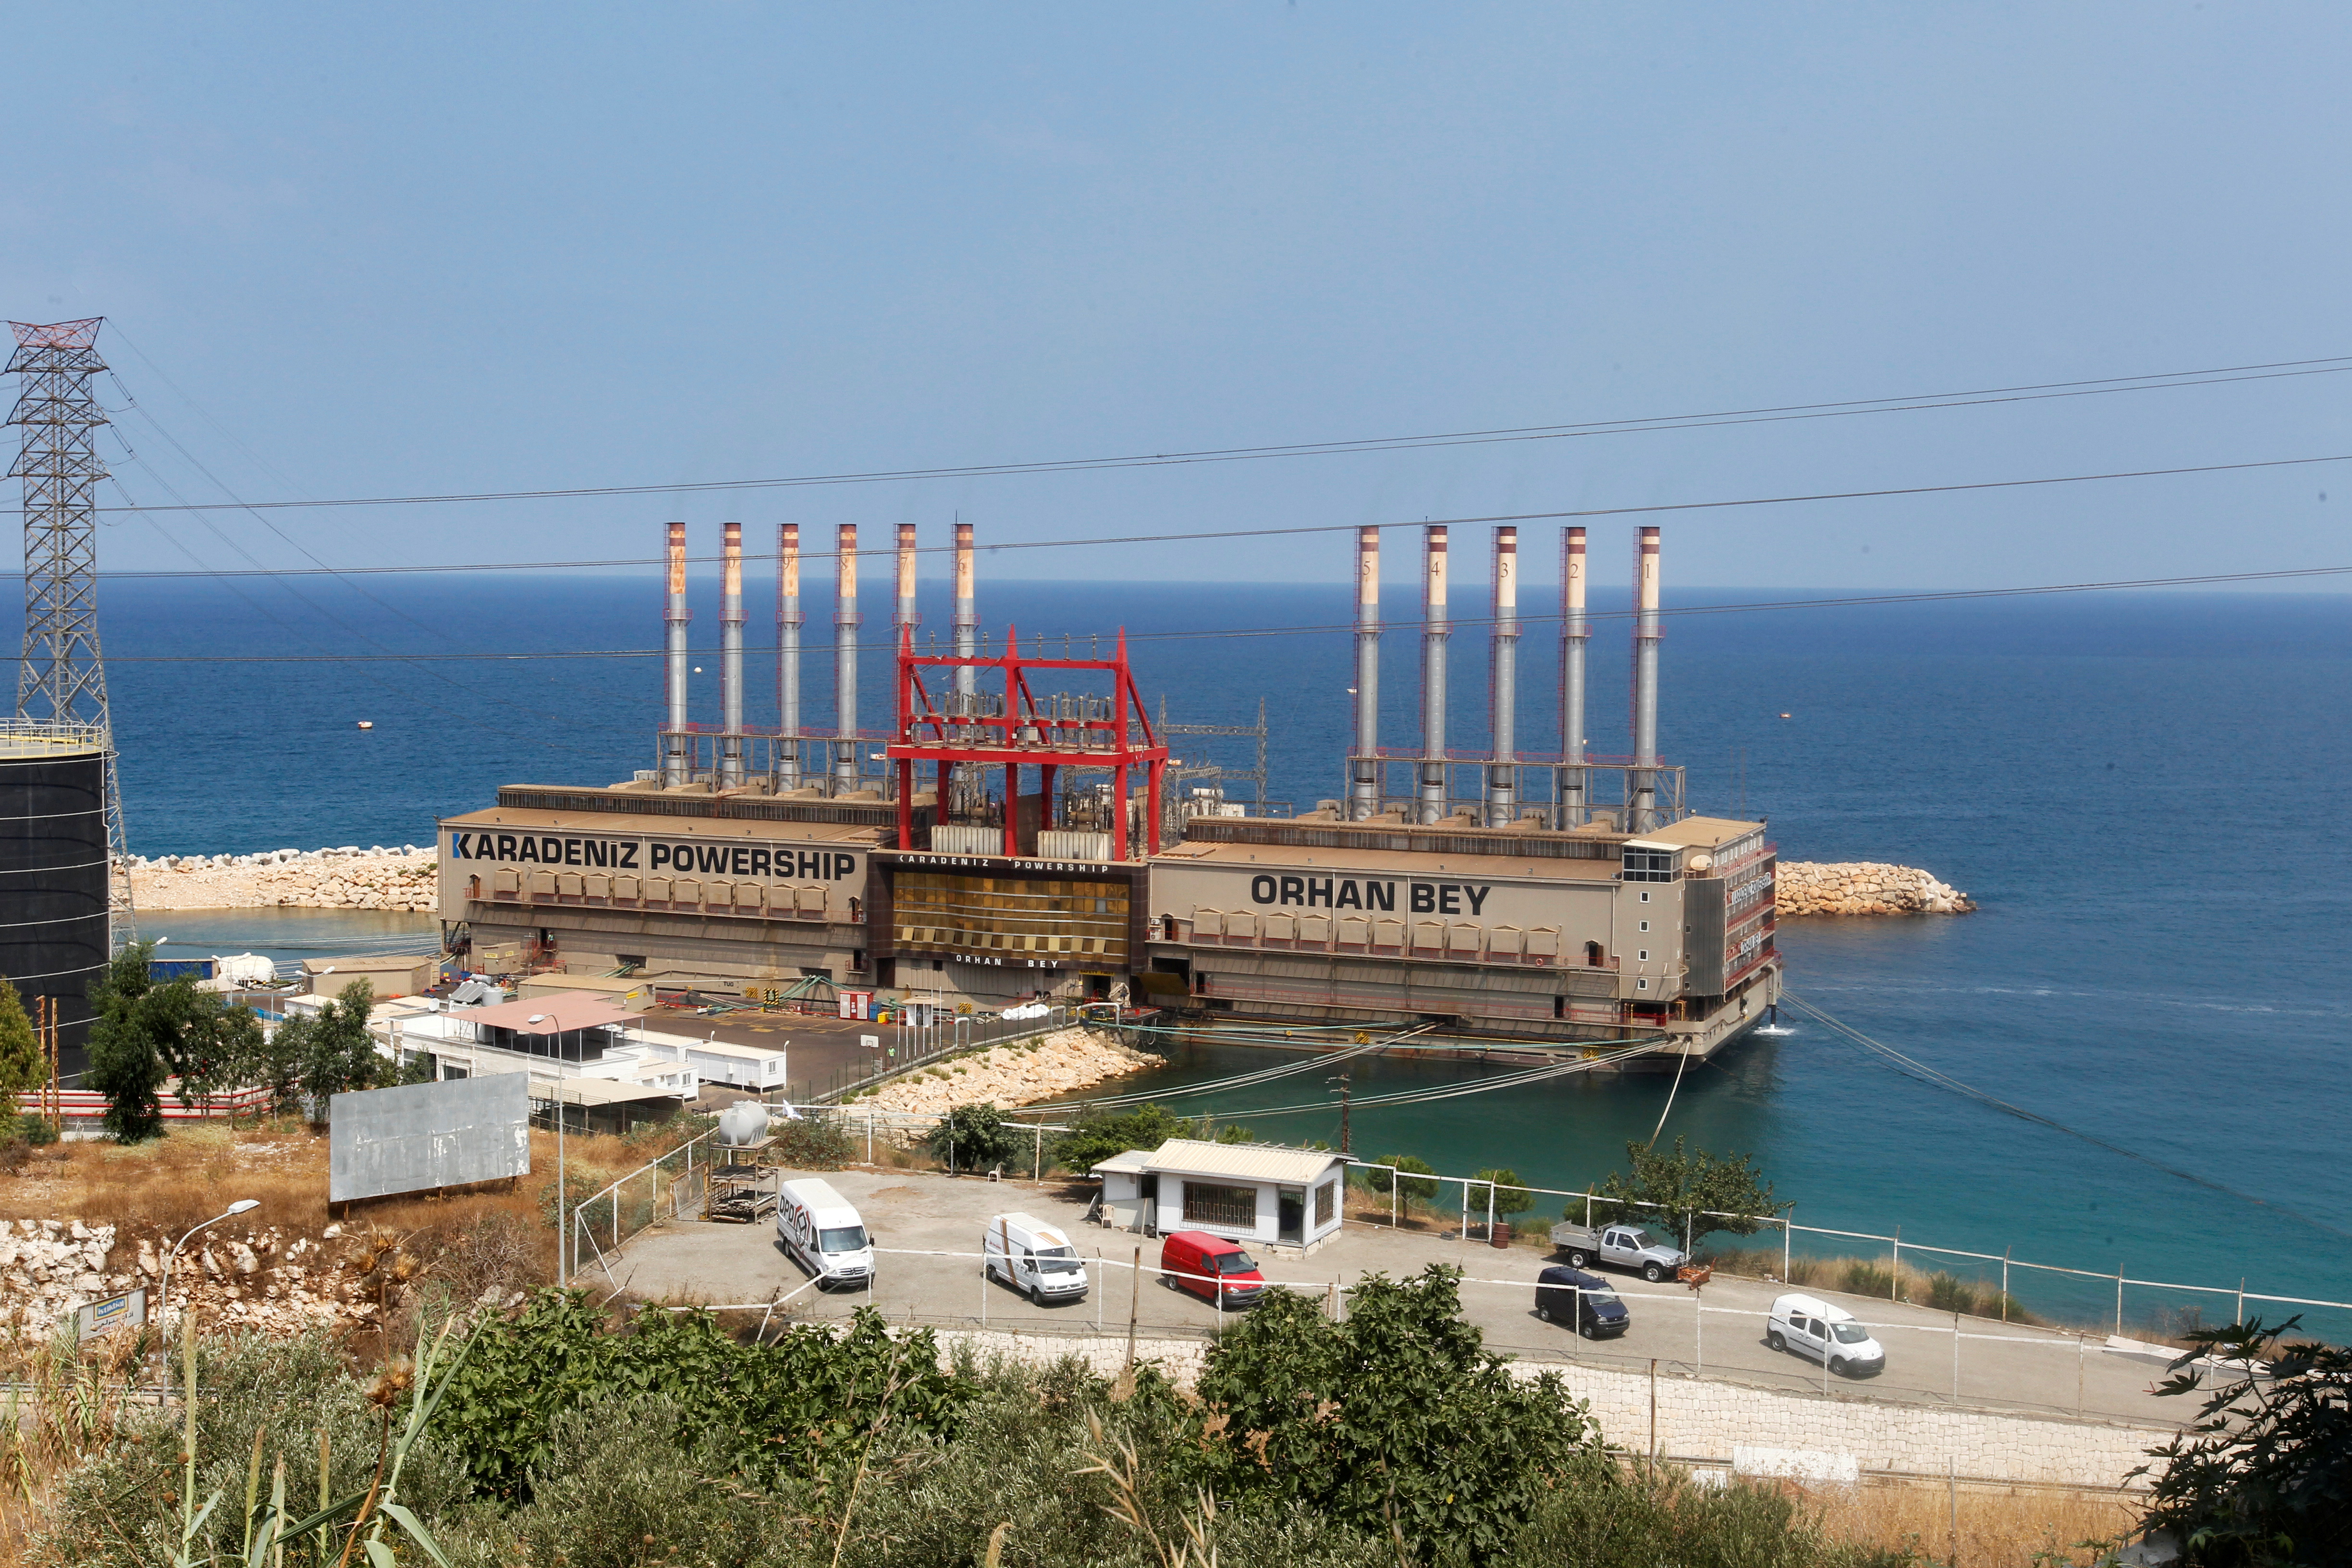 Karadeniz Powership Orhan Bey, an electricity-generating ship from Turkey, docked at the port of Jiyeh, south of Beirut